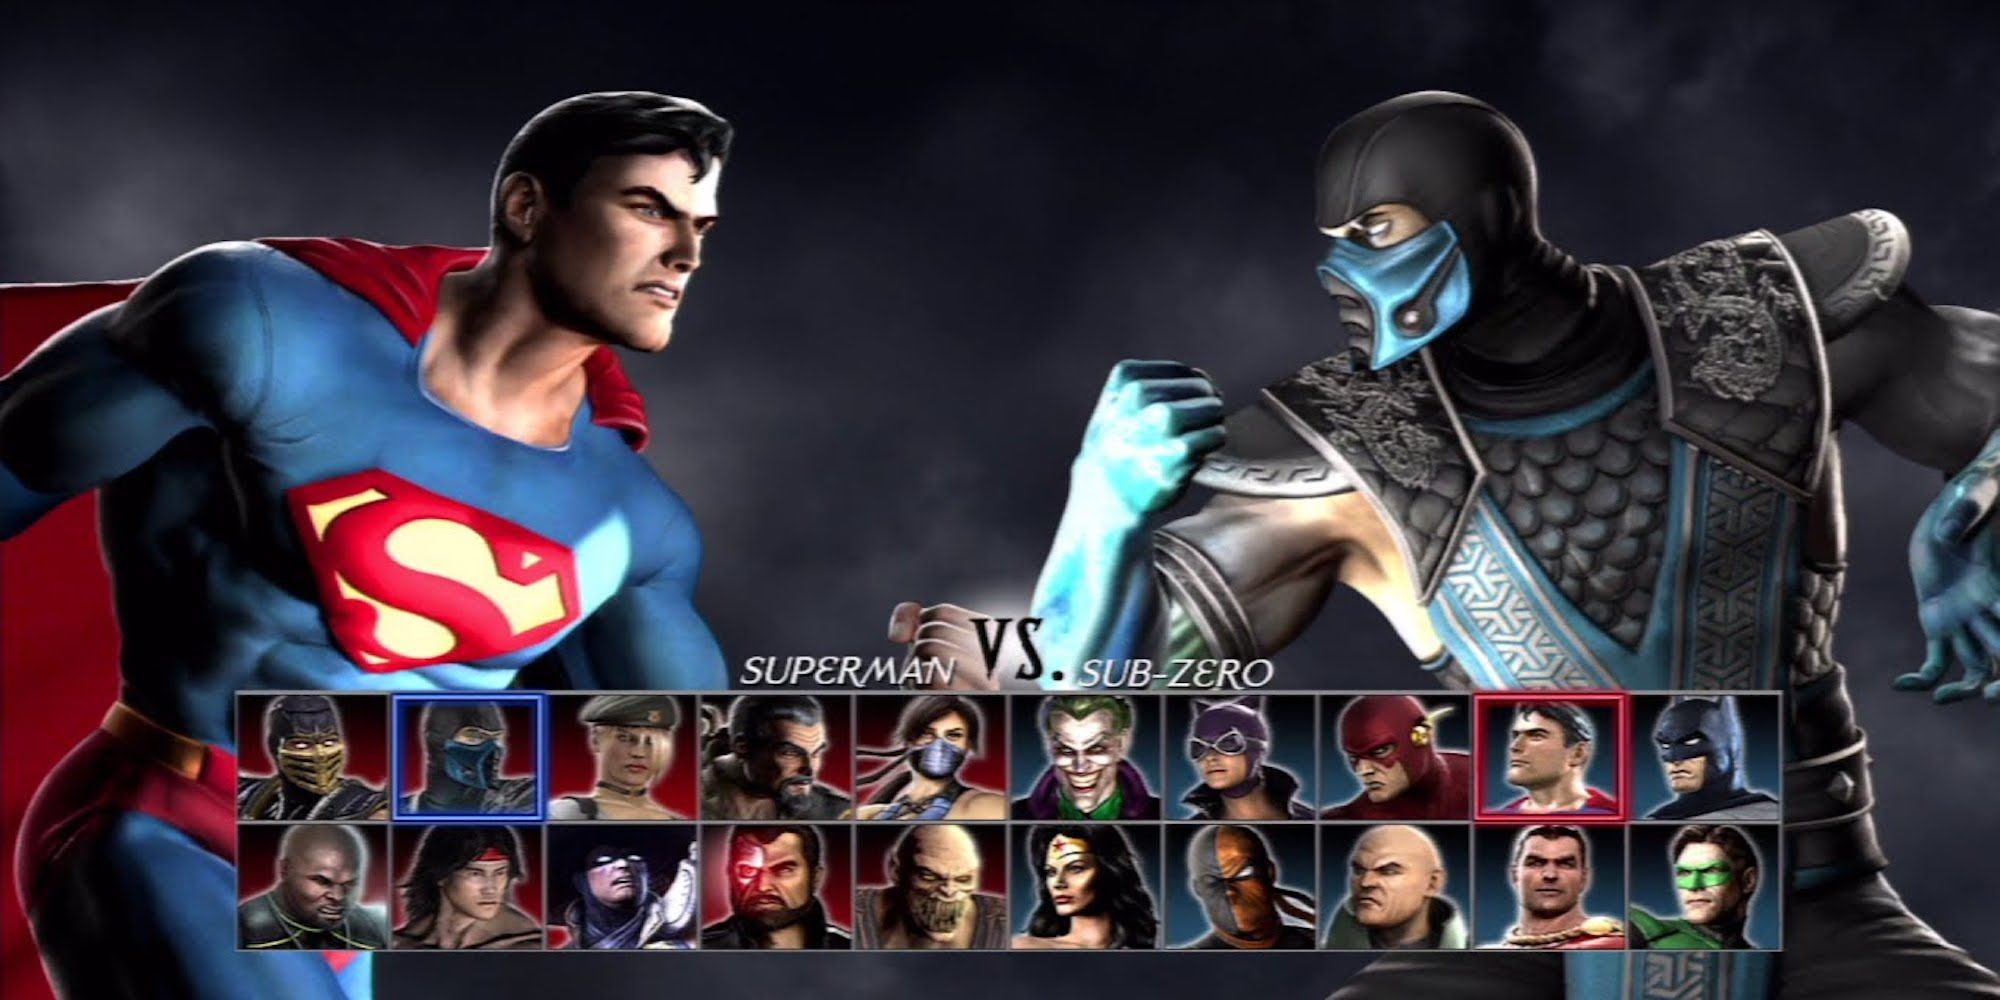 The character select screen in Mortal Kombat vs DC Universe